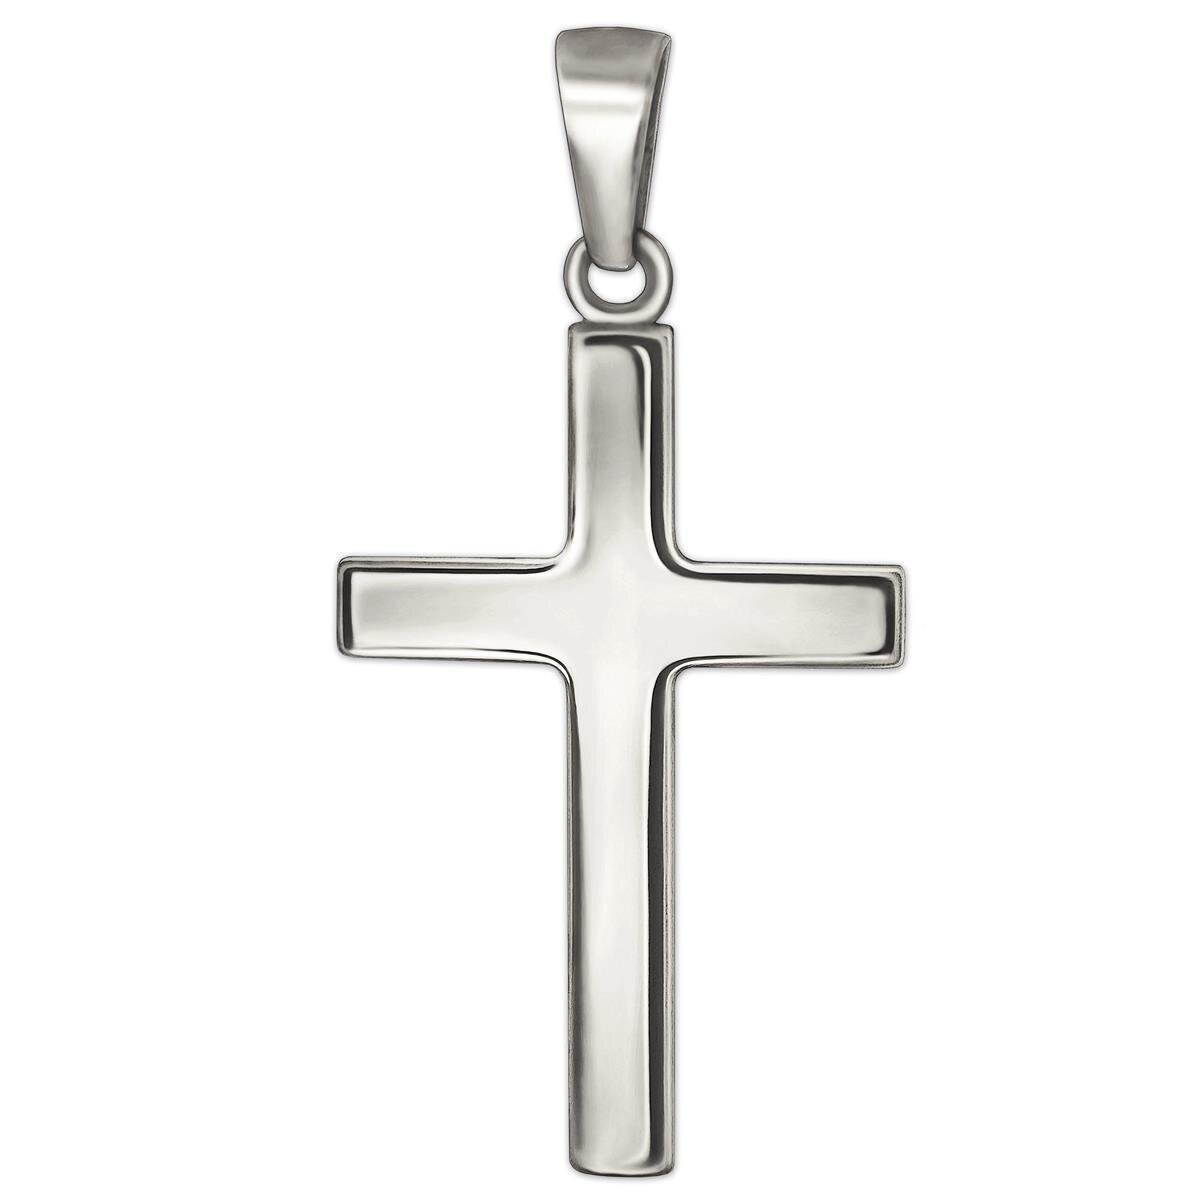 Silberner Anhänger Kreuz 21 mm schlicht glänzend Echt Silber 925